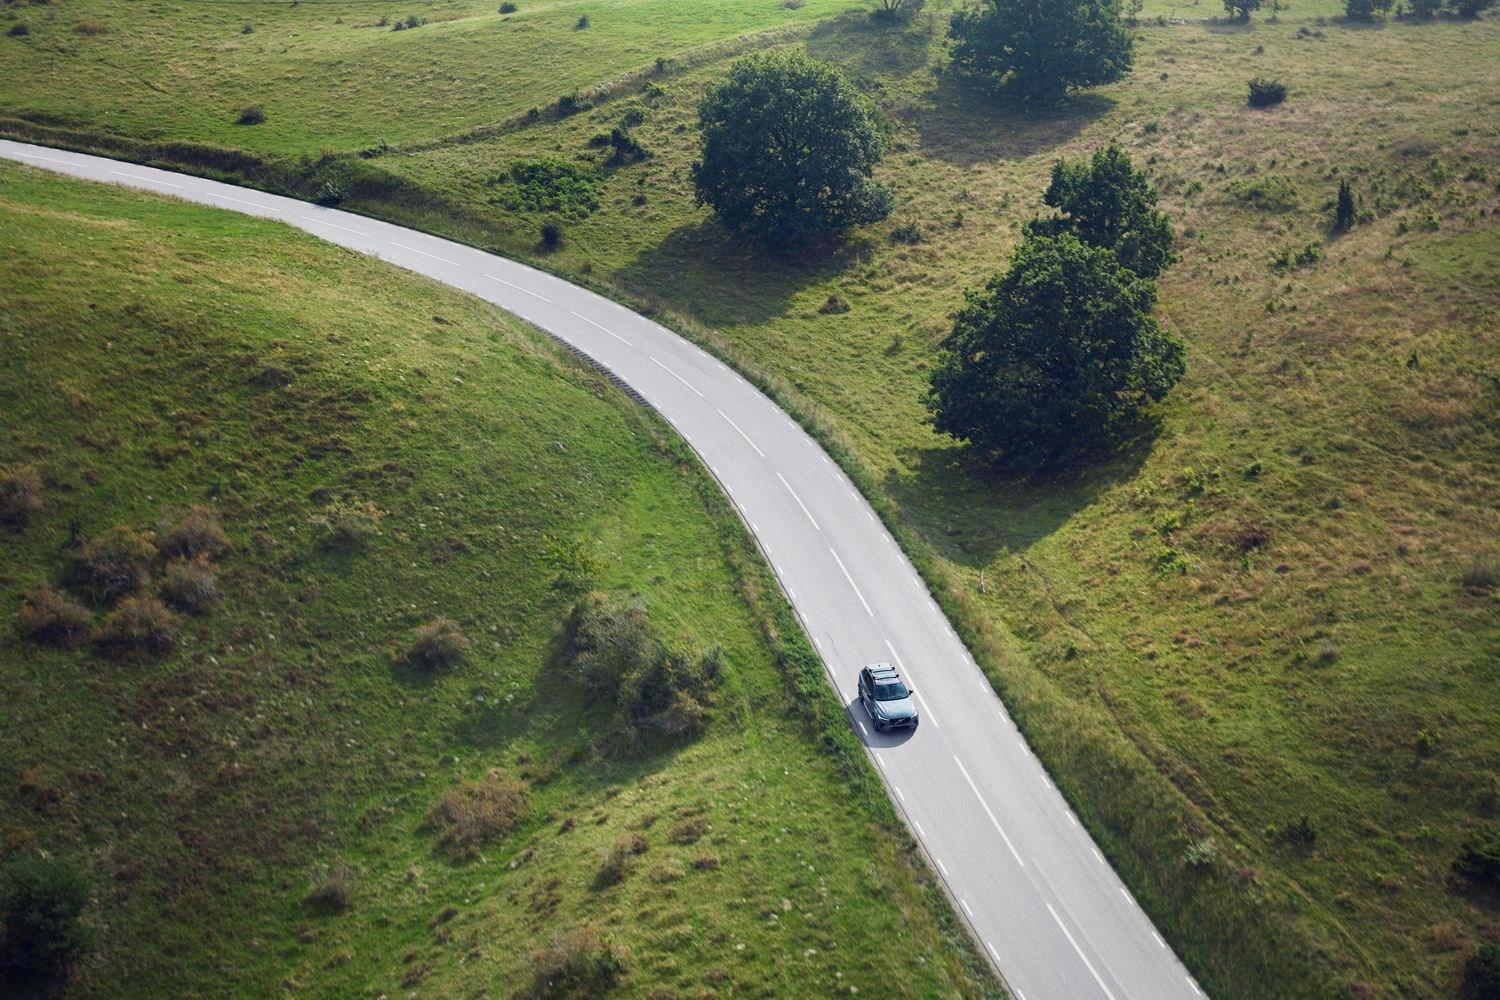 Grey new Volvo car drives along winding countryside road